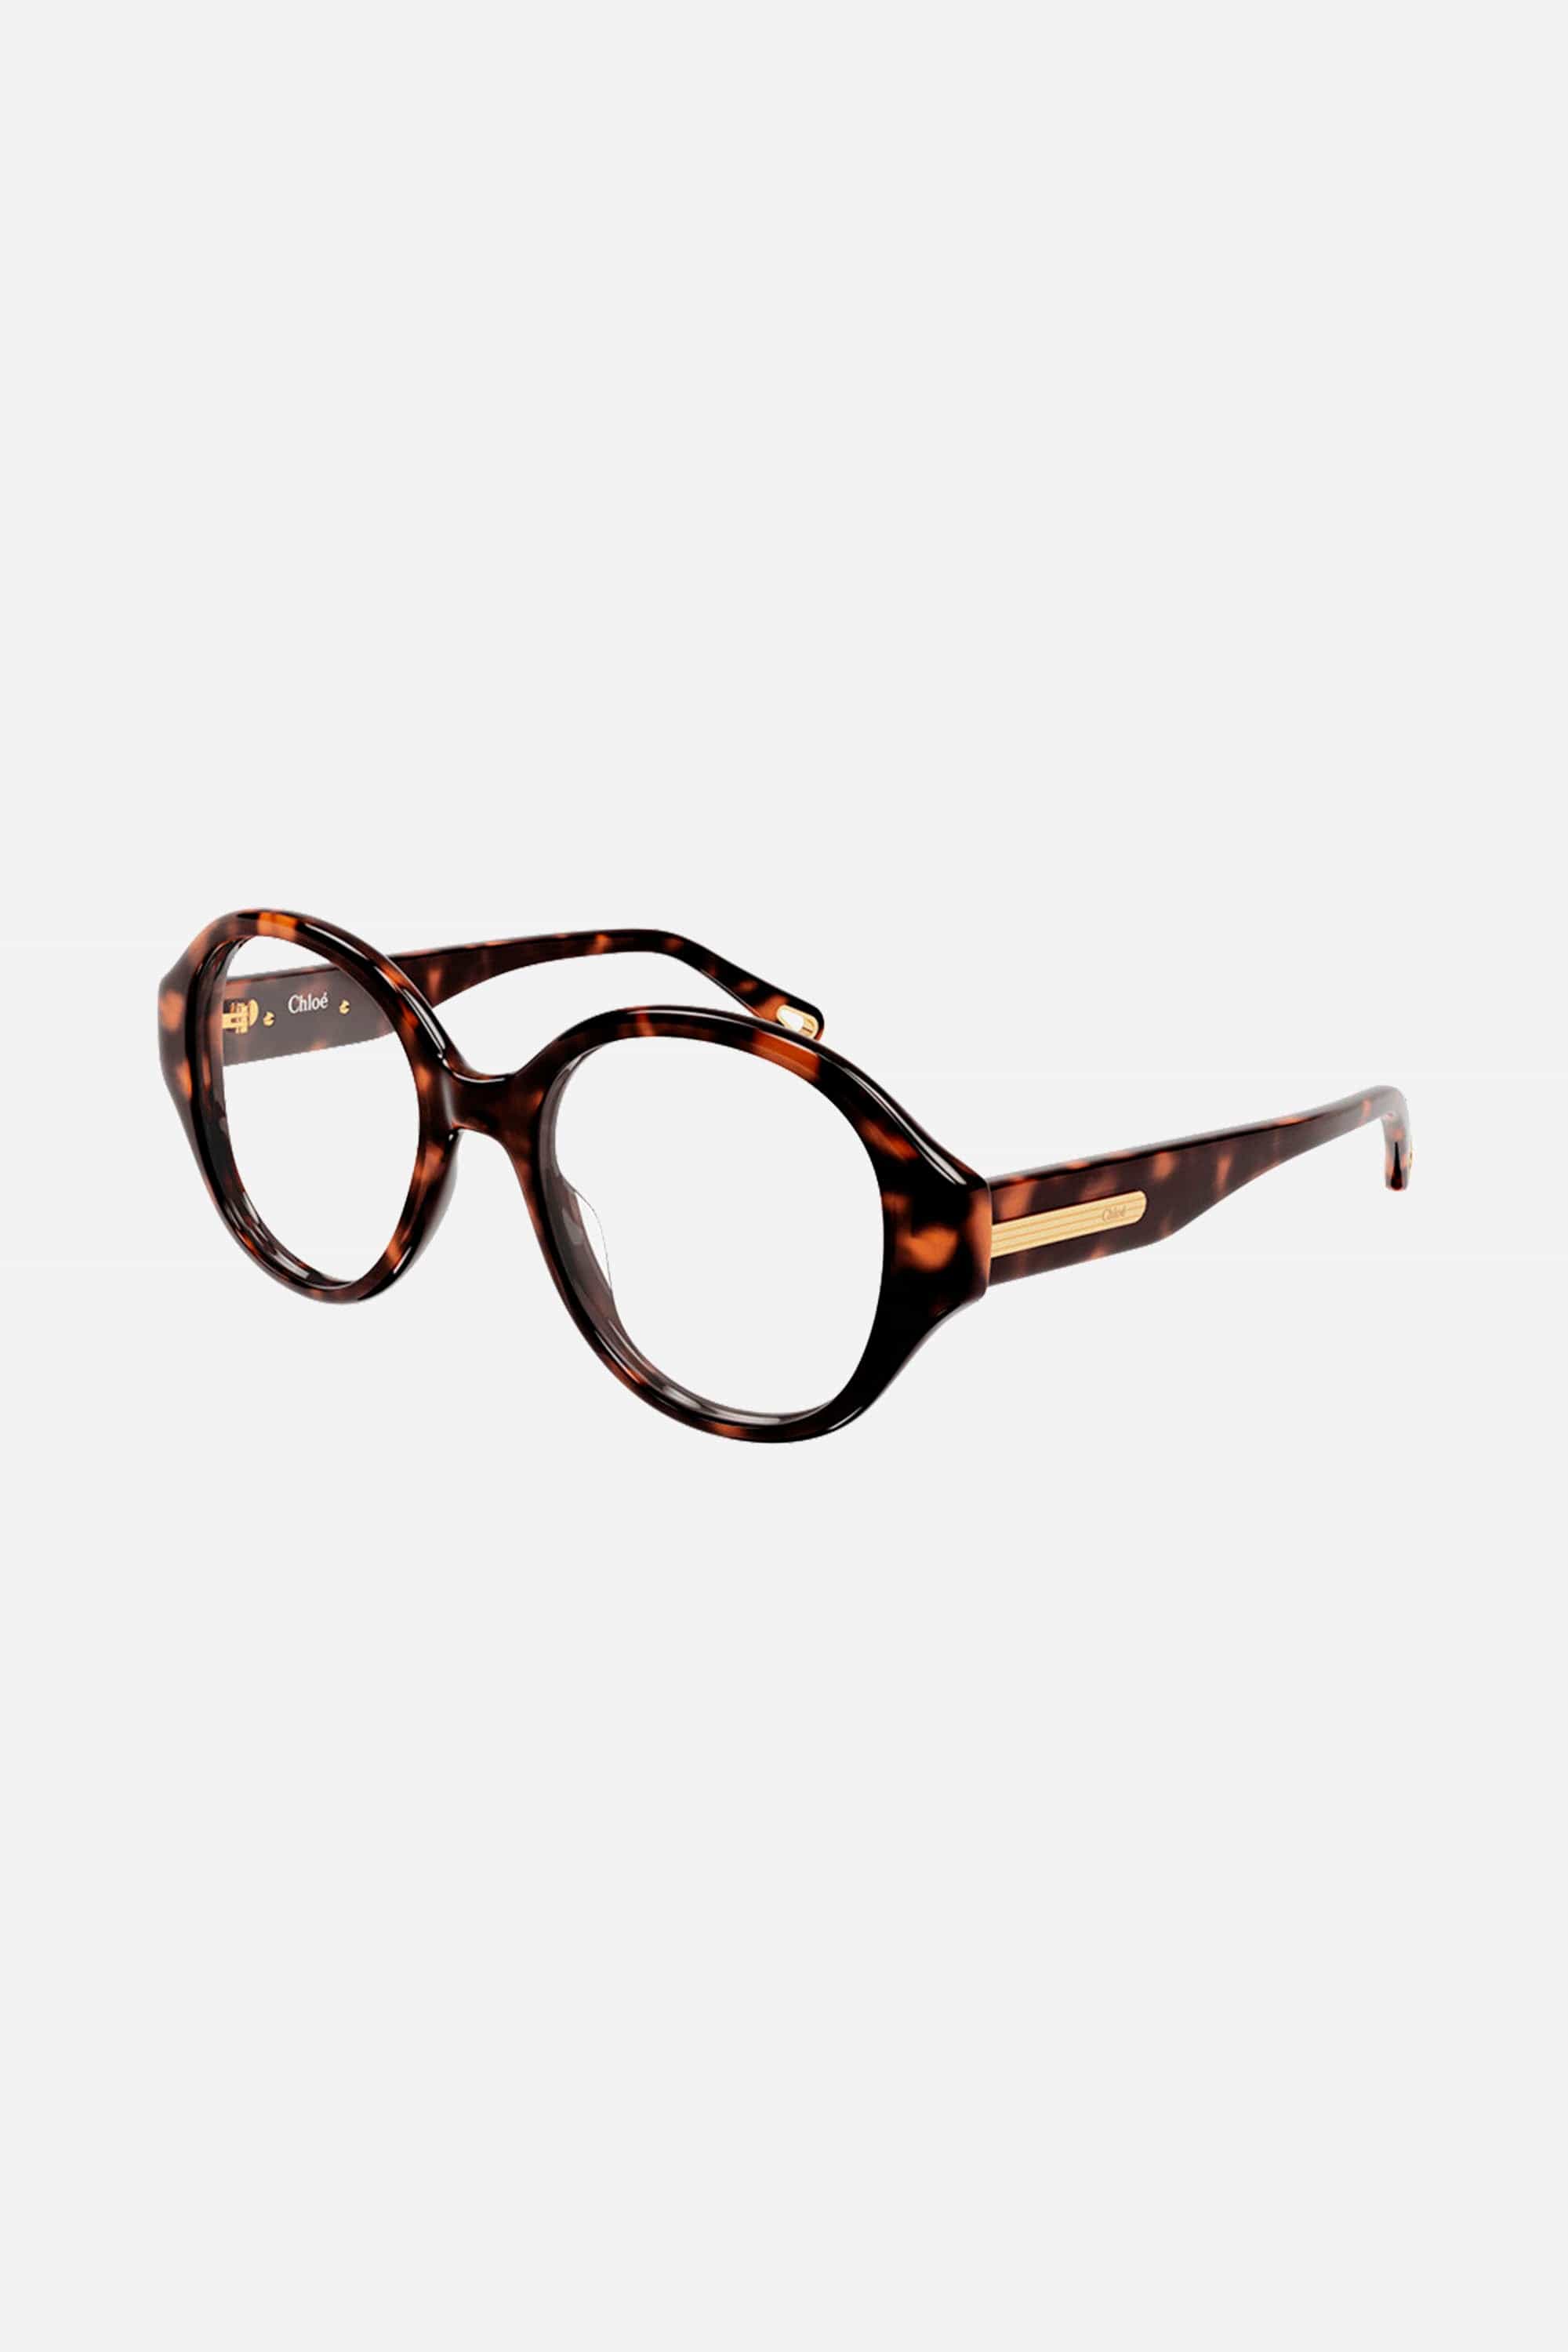 Chloe acetate havana round optical glasses - Eyewear Club